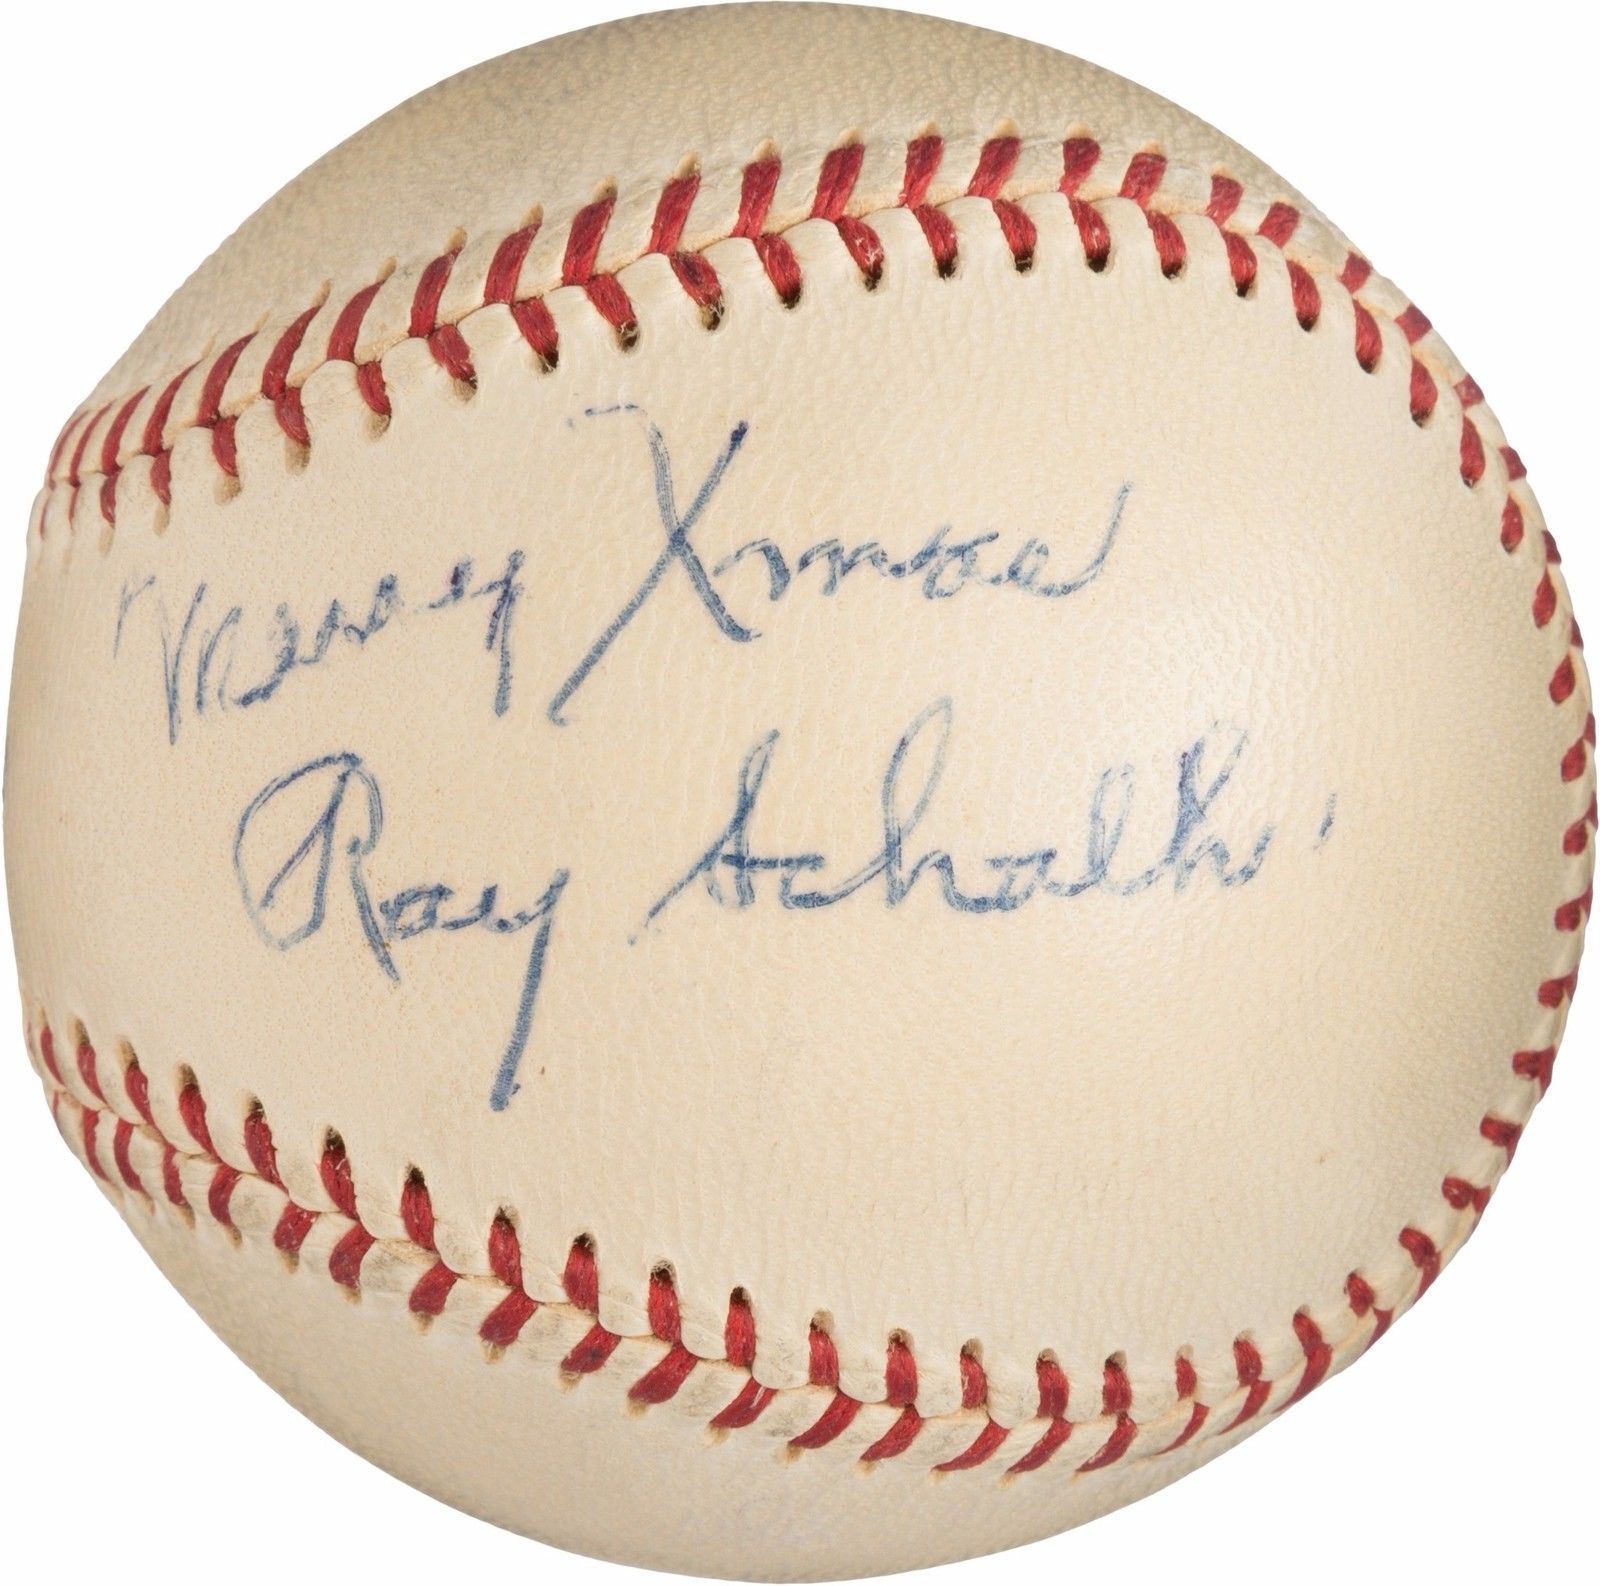 The Finest Ray Schalk Single Signed American League Baseball PSA DNA COA